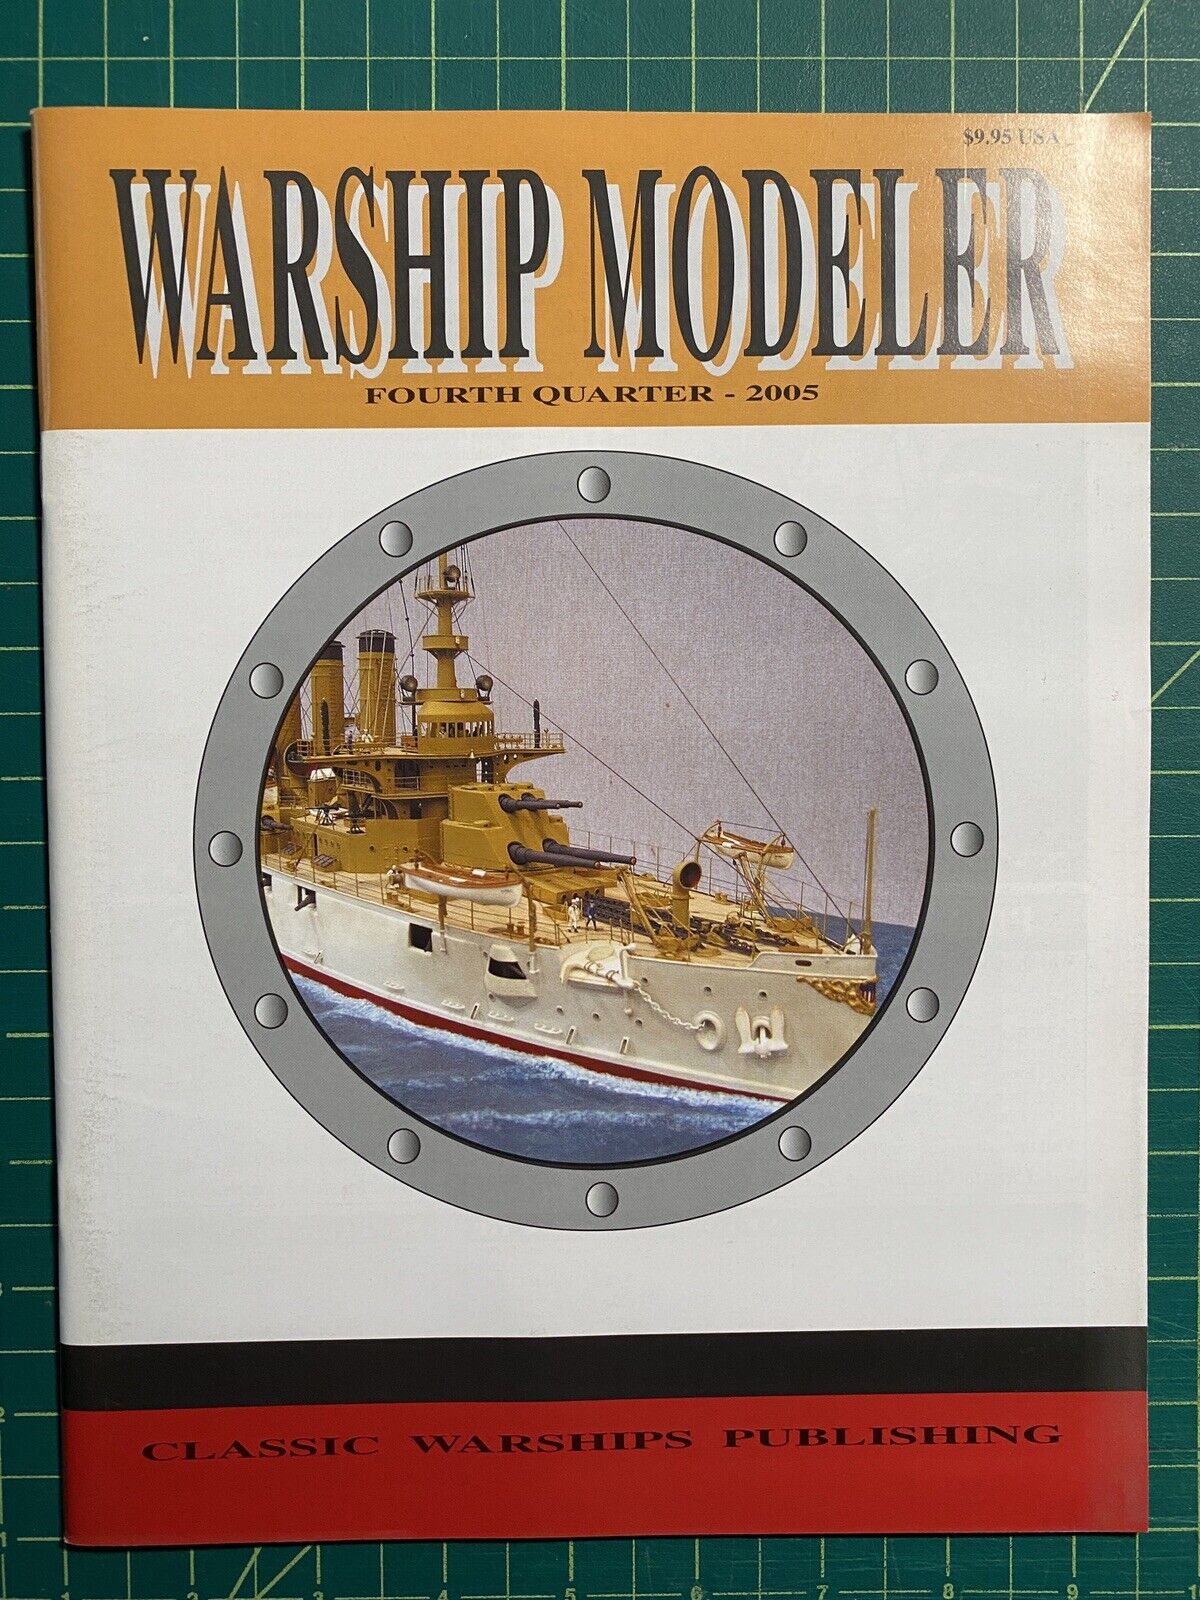 Classic Warships Publishing Modeler 4th Quarter Issue Model Ship Pictorial 1/350